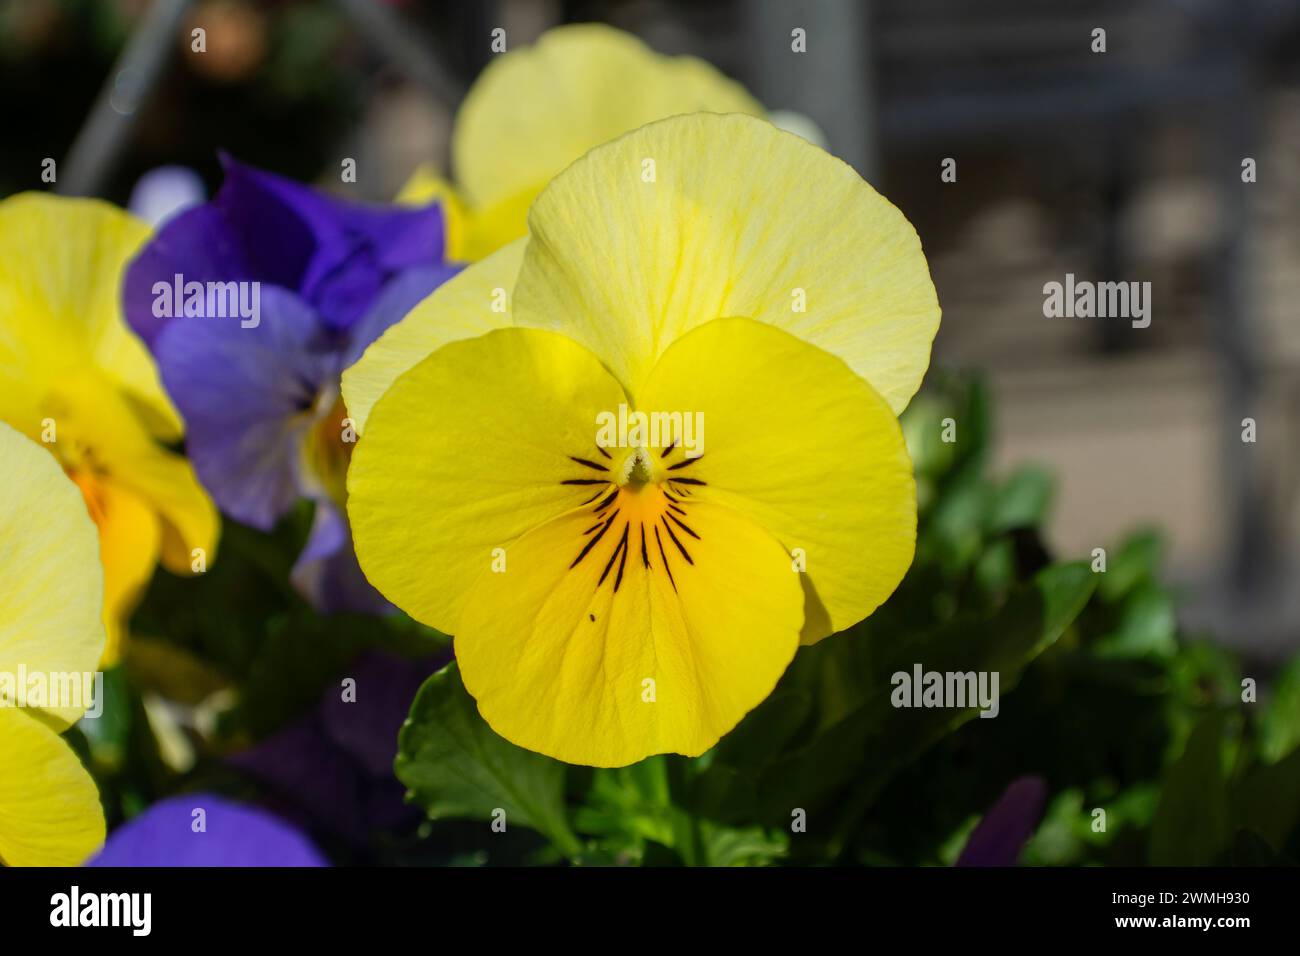 Garden flowers, pansies Stock Photo